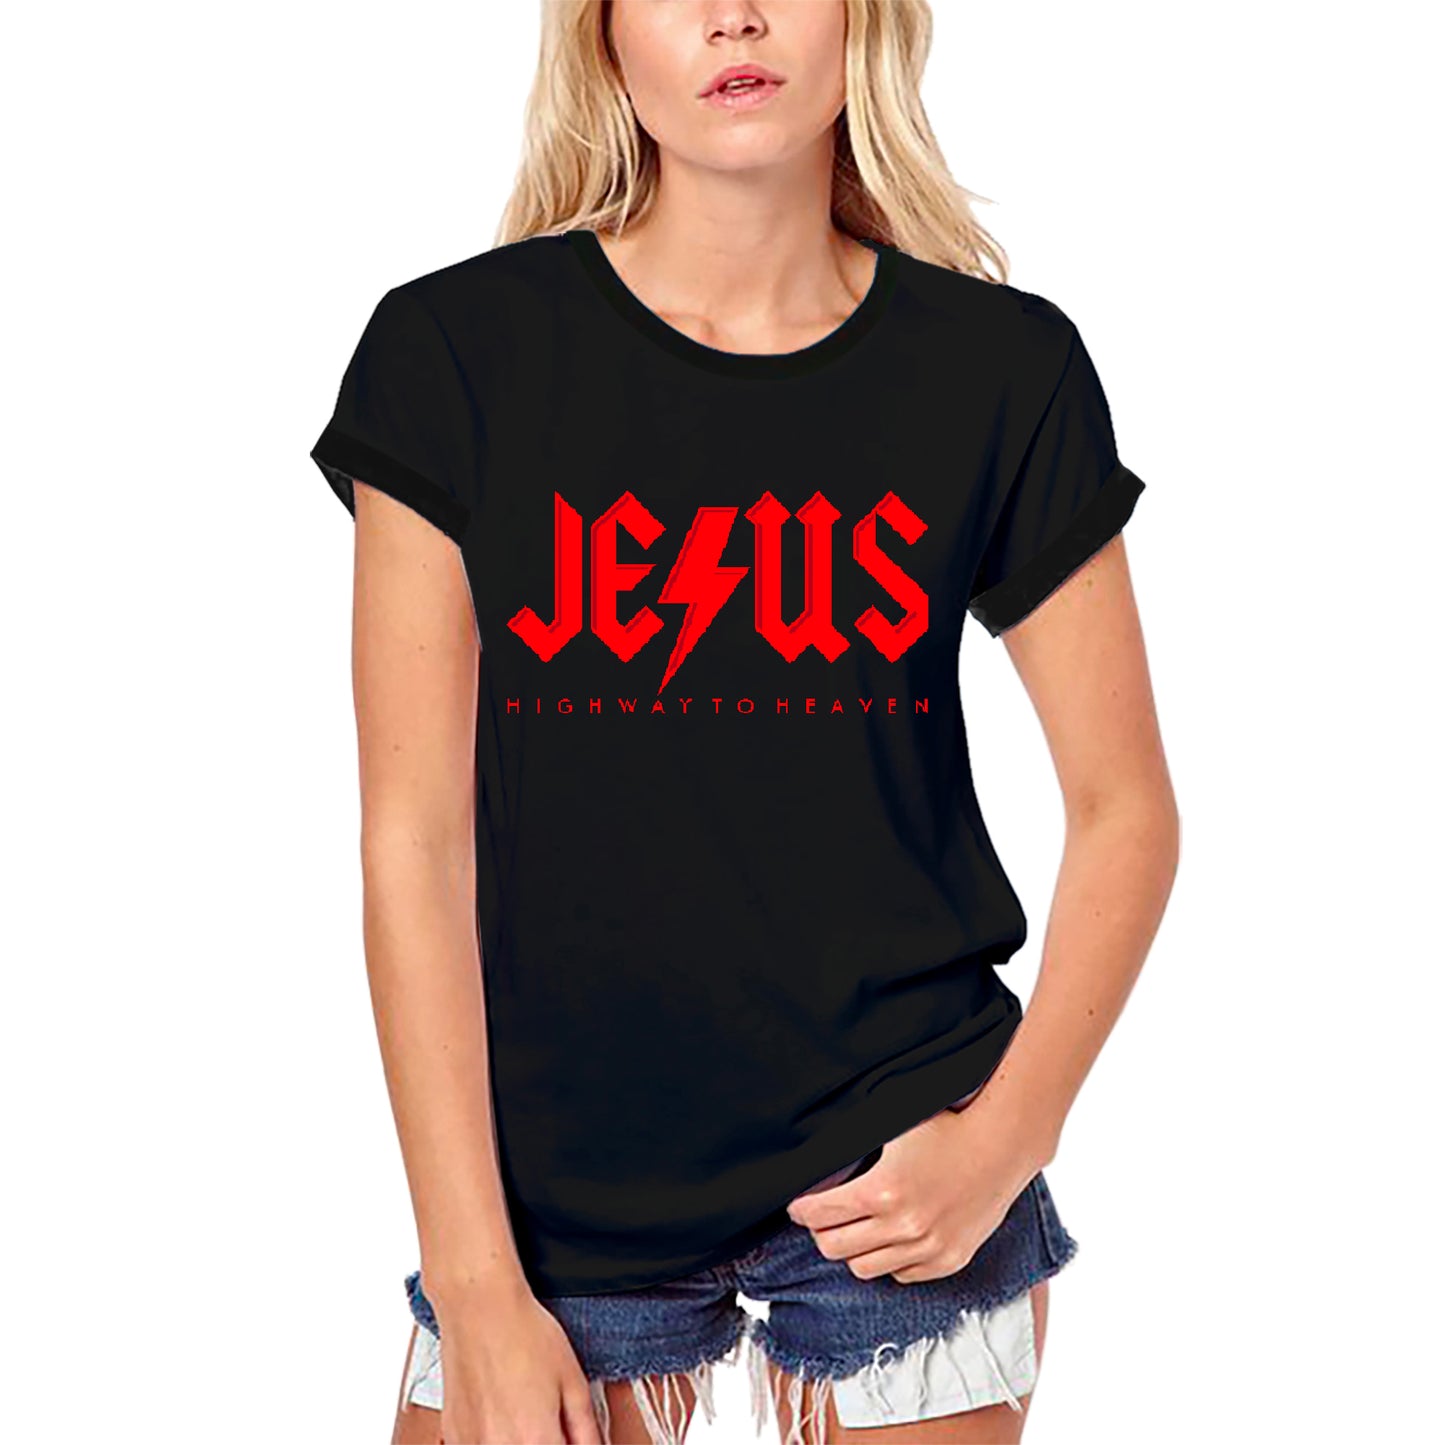 ULTRABASIC Damen Bio-T-Shirt Jesus Highway to Heaven – Religiöses Shirt